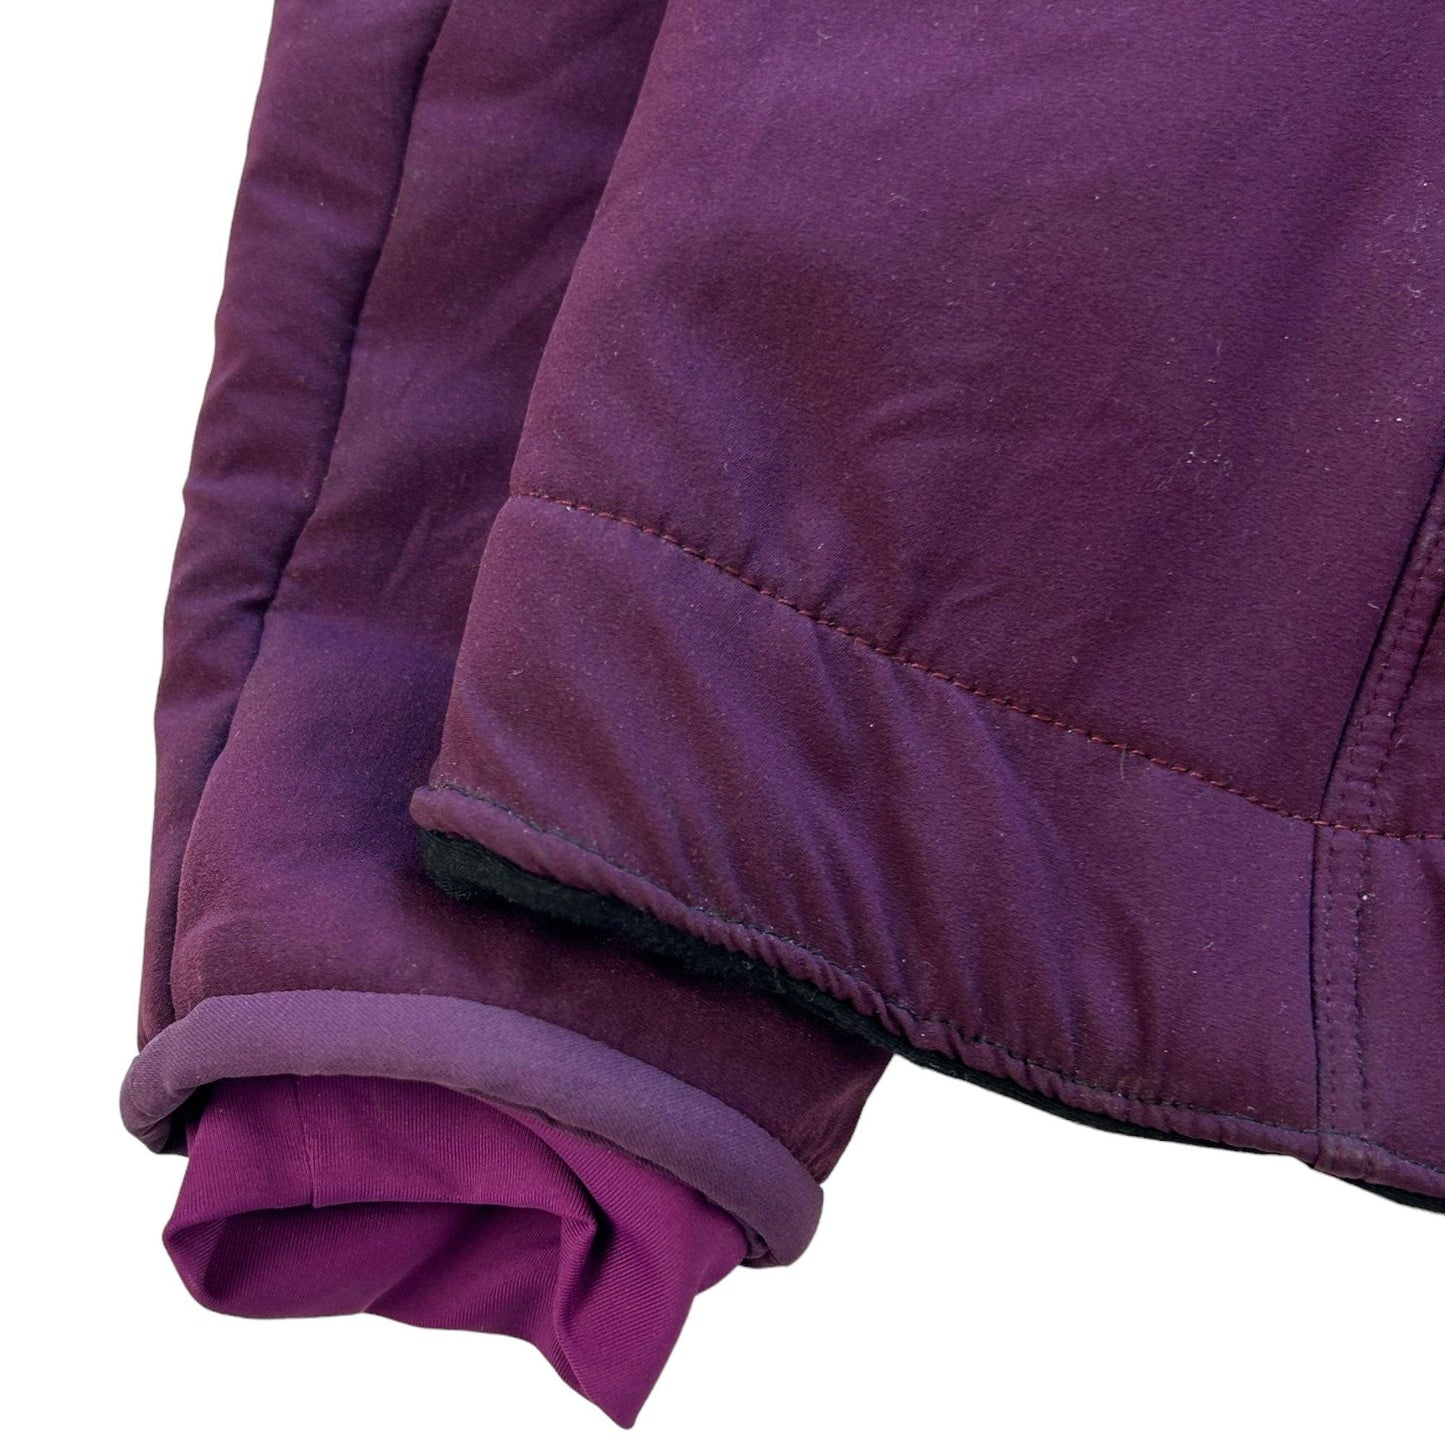 Vintage Arcteryx Fleece Lined Jacket Woman's Size XS - Known Source